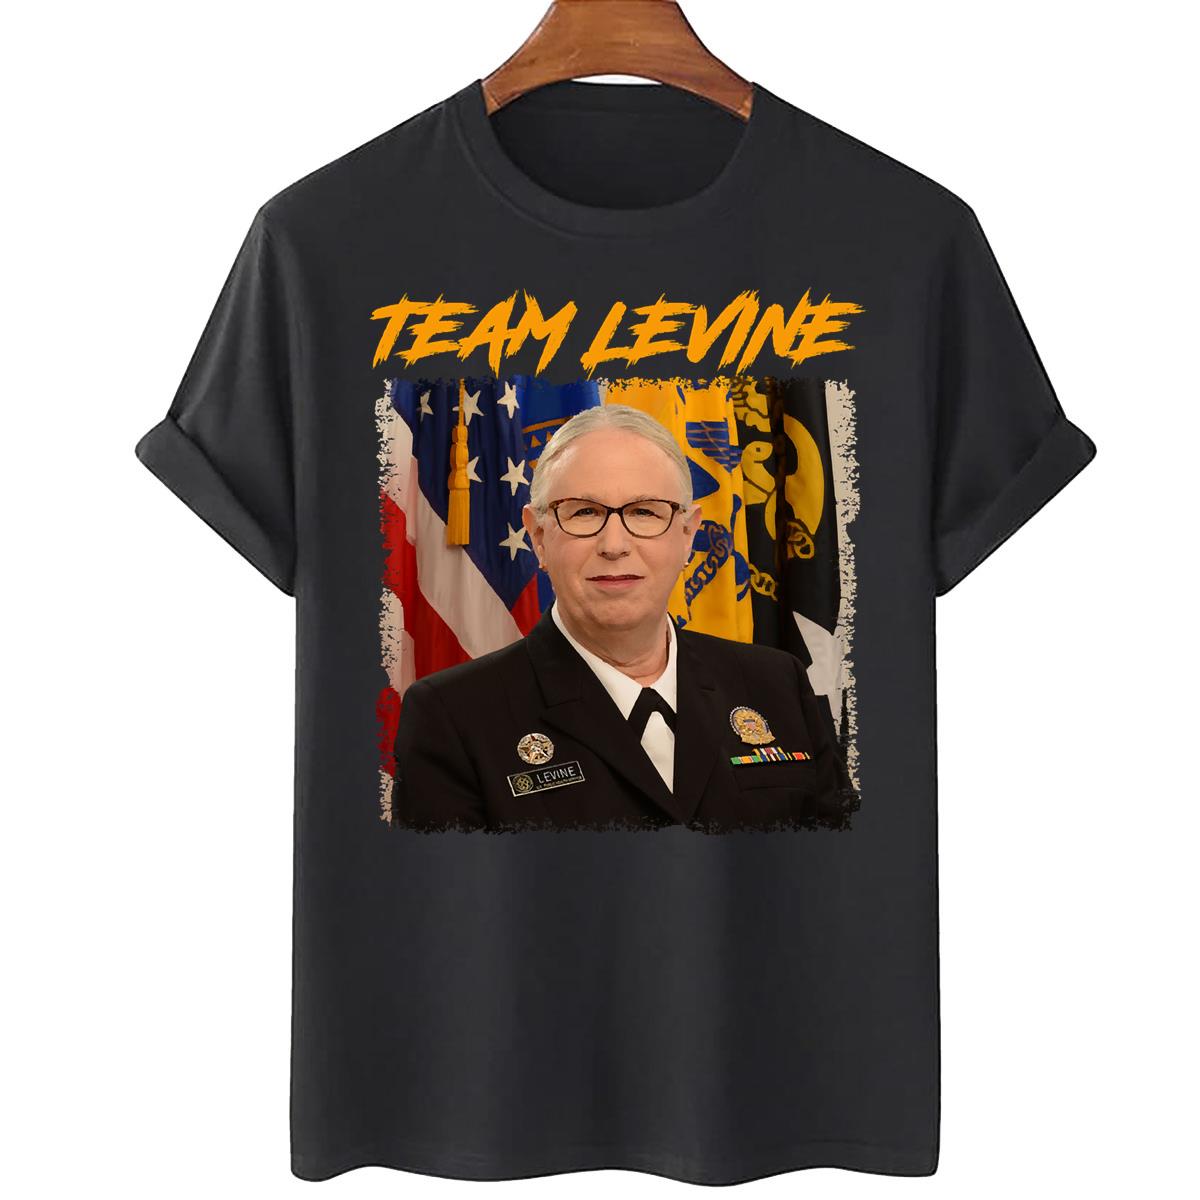 Rachel Levine T-Shirt, Team Levine Unisex T-Shirt